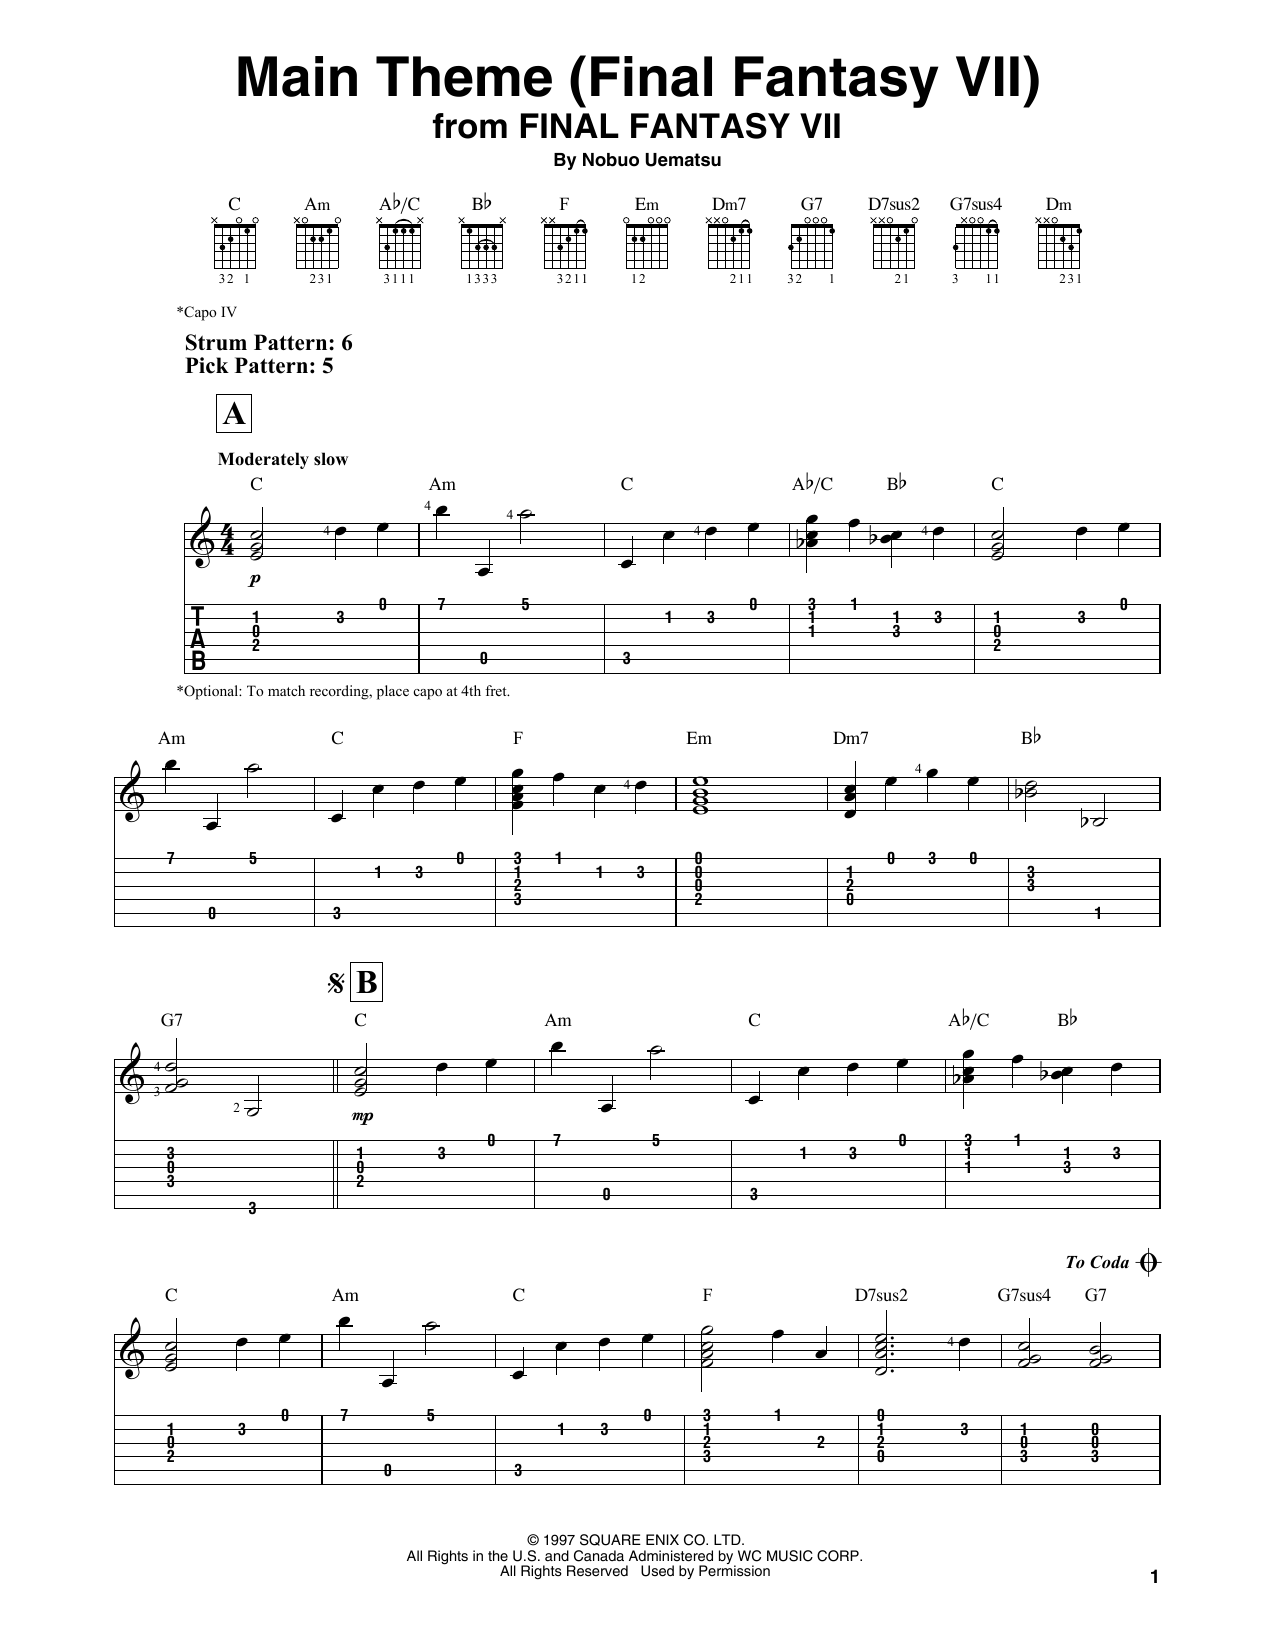 Nobuo Uematsu Main Theme (Final Fantasy VII) Sheet Music Notes & Chords for Easy Guitar Tab - Download or Print PDF